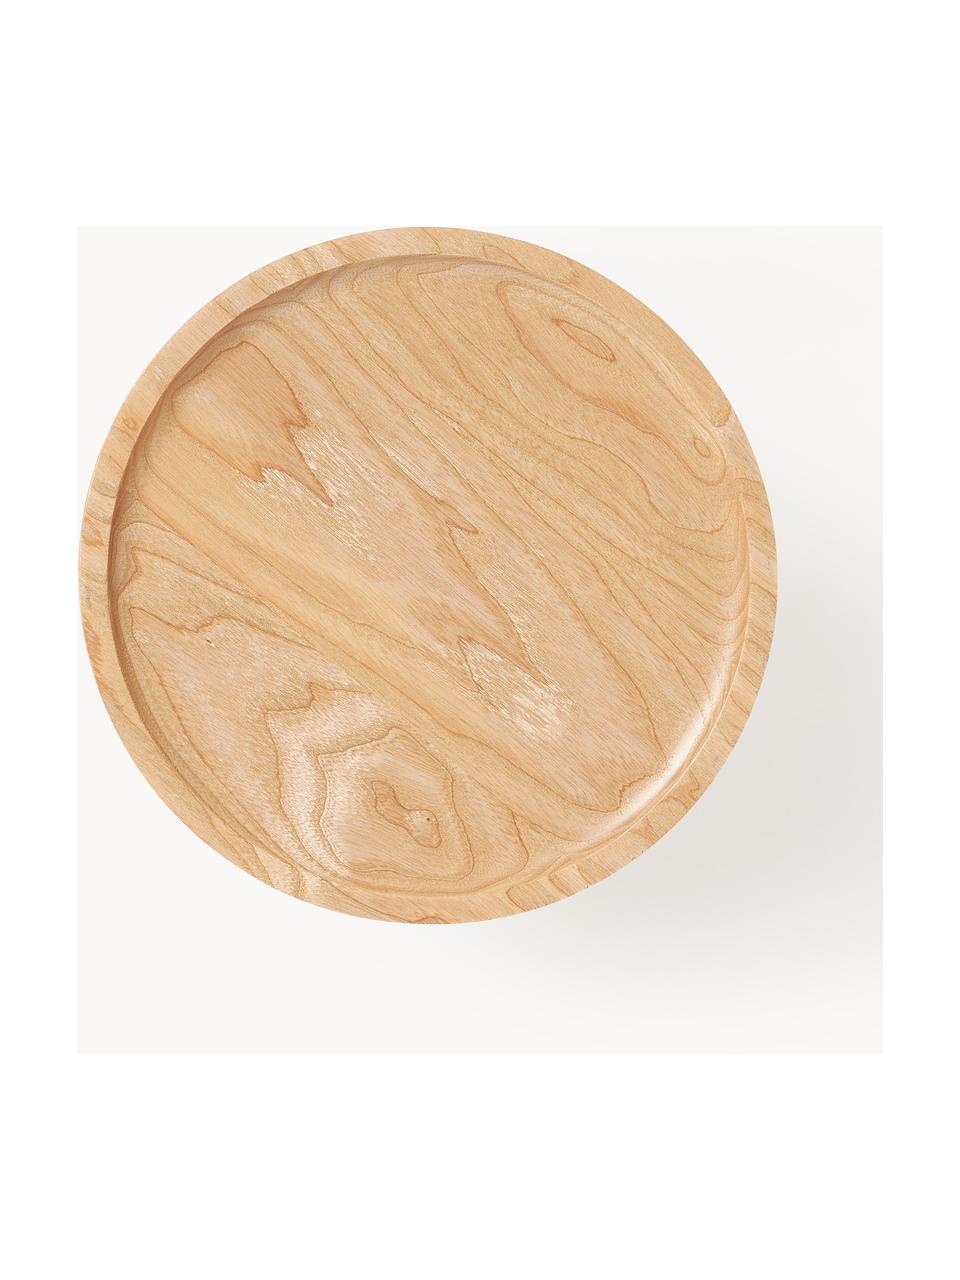 Deko-Tablett Keoni aus Eschenholz, Eschenholz, lackiert

Dieses Produkt wird aus nachhaltig gewonnenem, FSC®-zertifiziertem Holz gefertigt., Eschenholz, Ø 22 cm